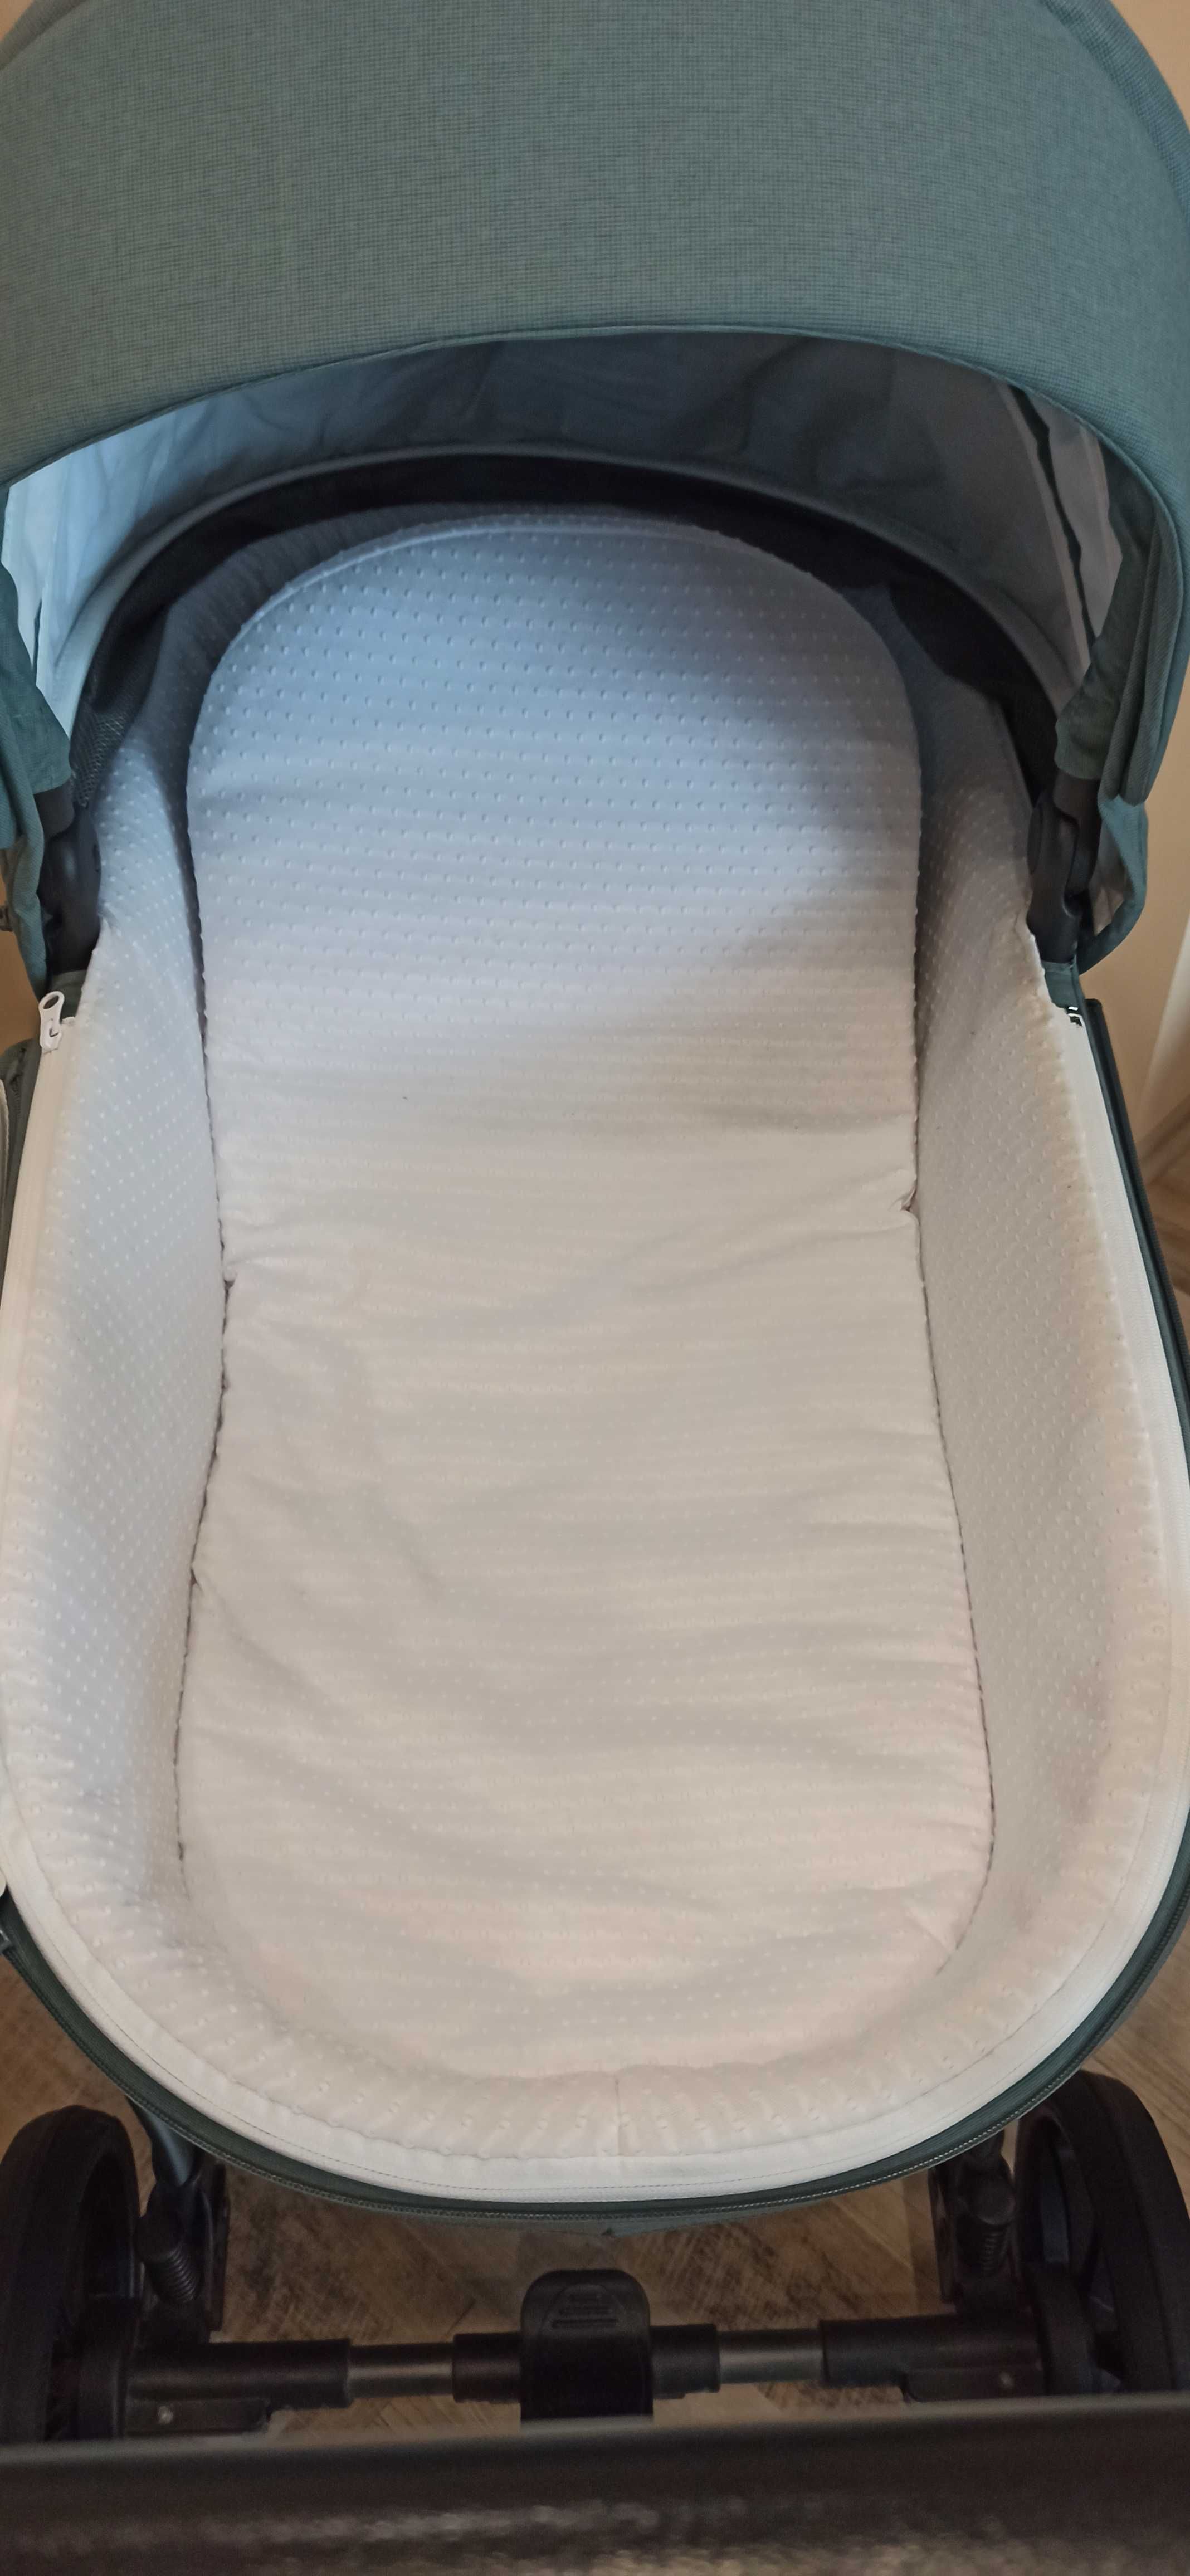 Бебешка количка Tutis Uno 3+ цвят Menta